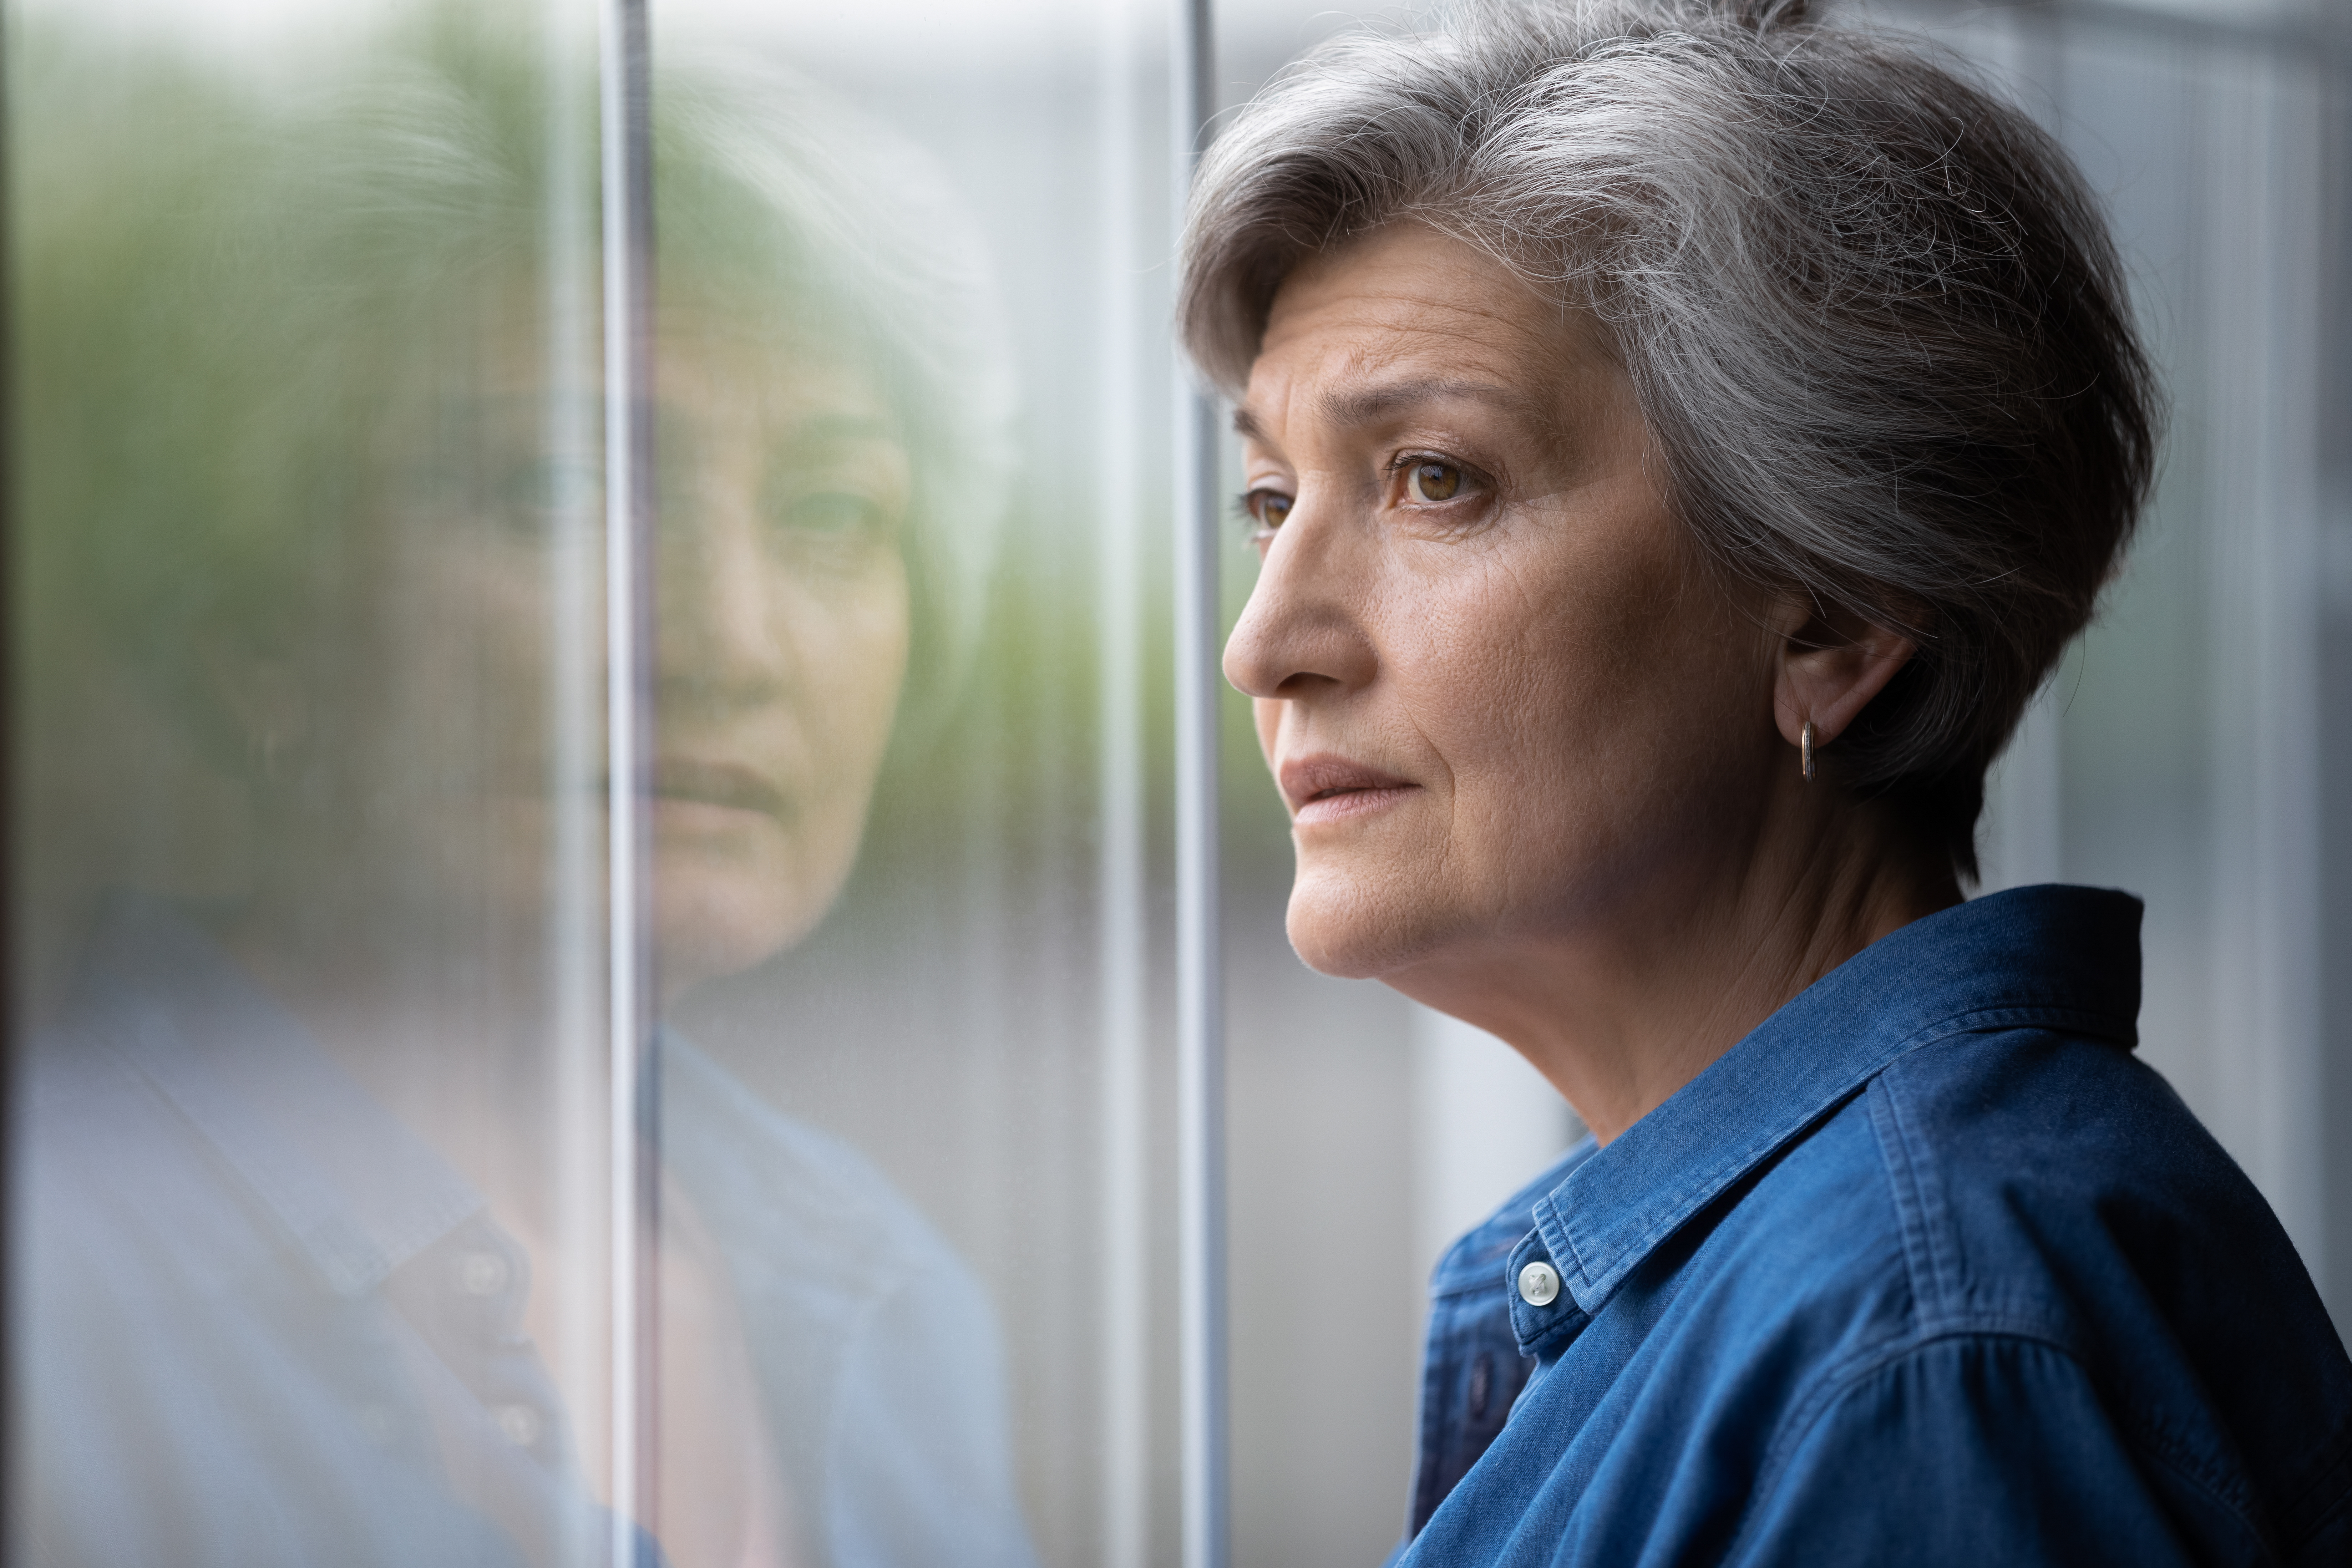 An upset senior woman looking outside | Source: Shutterstock